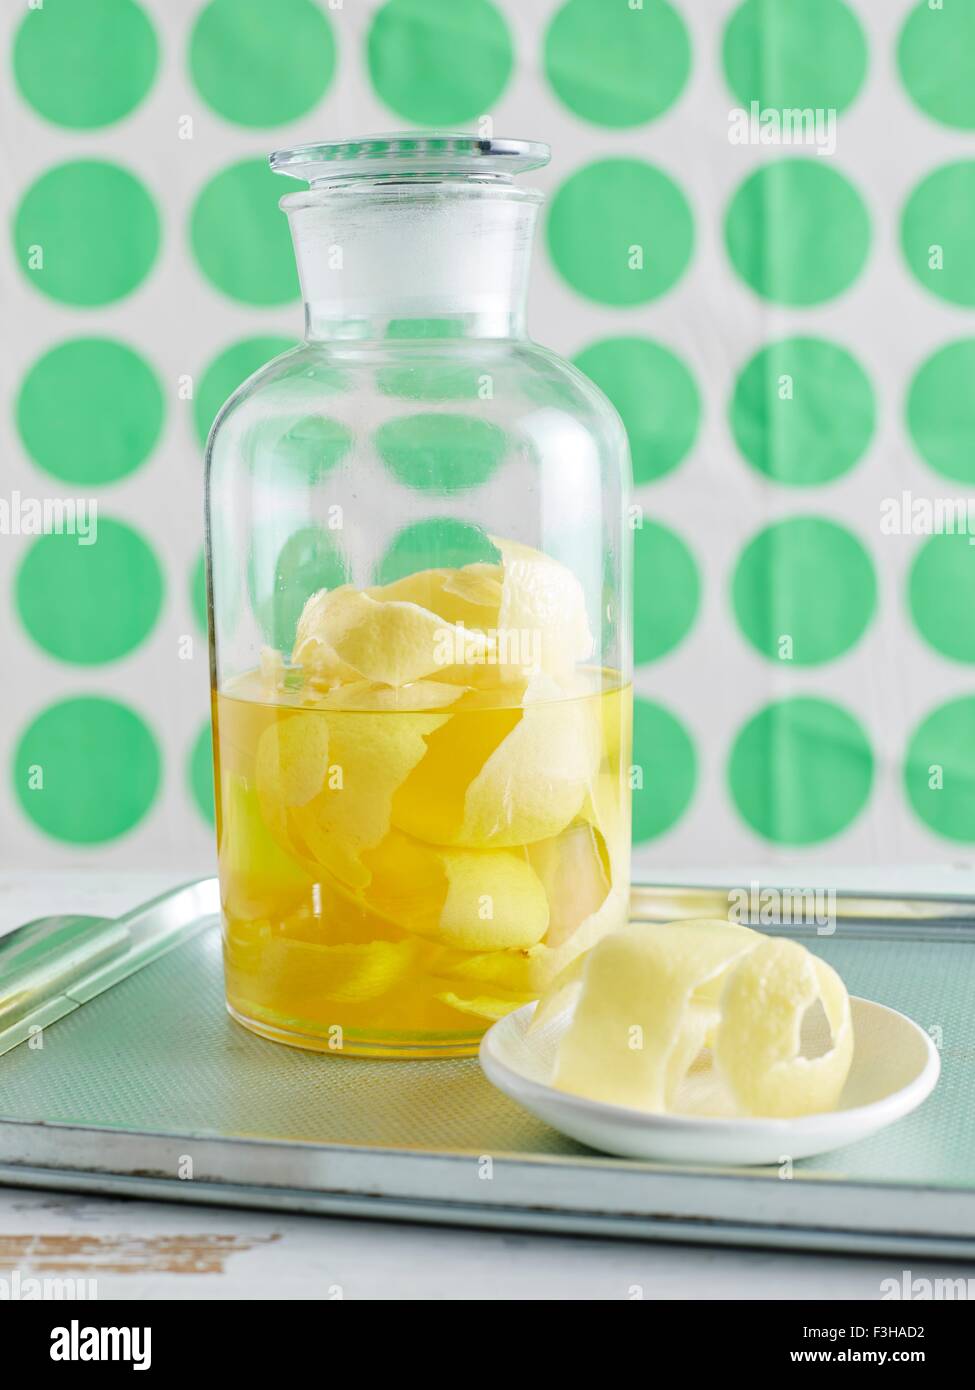 https://c8.alamy.com/comp/F3HAD2/lemon-peel-infusing-in-large-glass-jar-to-make-limoncello-F3HAD2.jpg